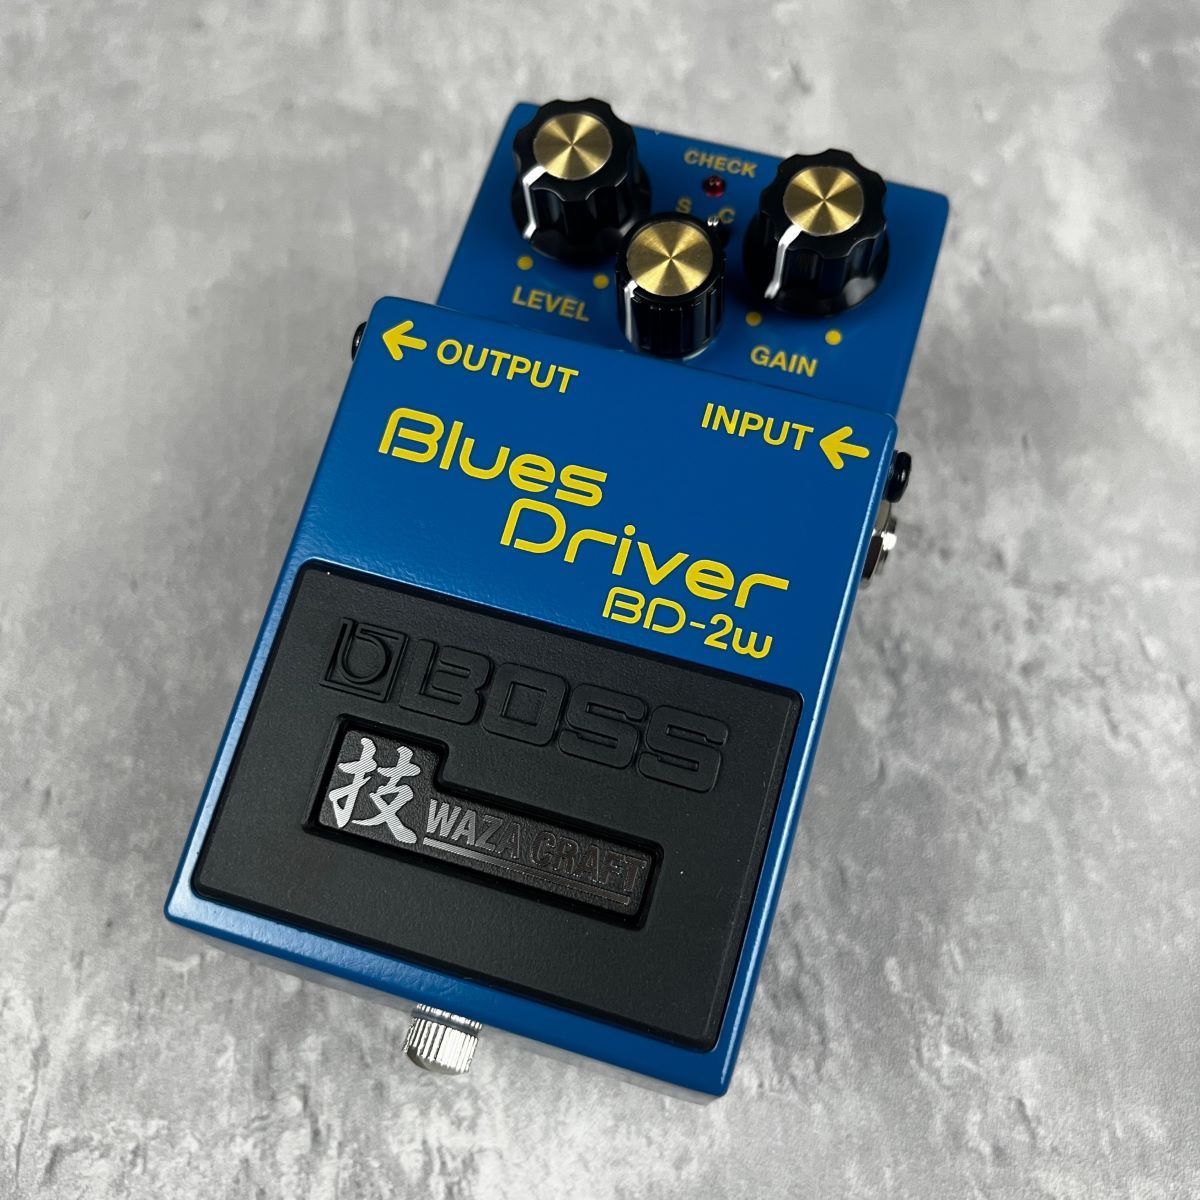 BOSS BD-2w 日本製 箱付き Blues Driver オーバードライブ